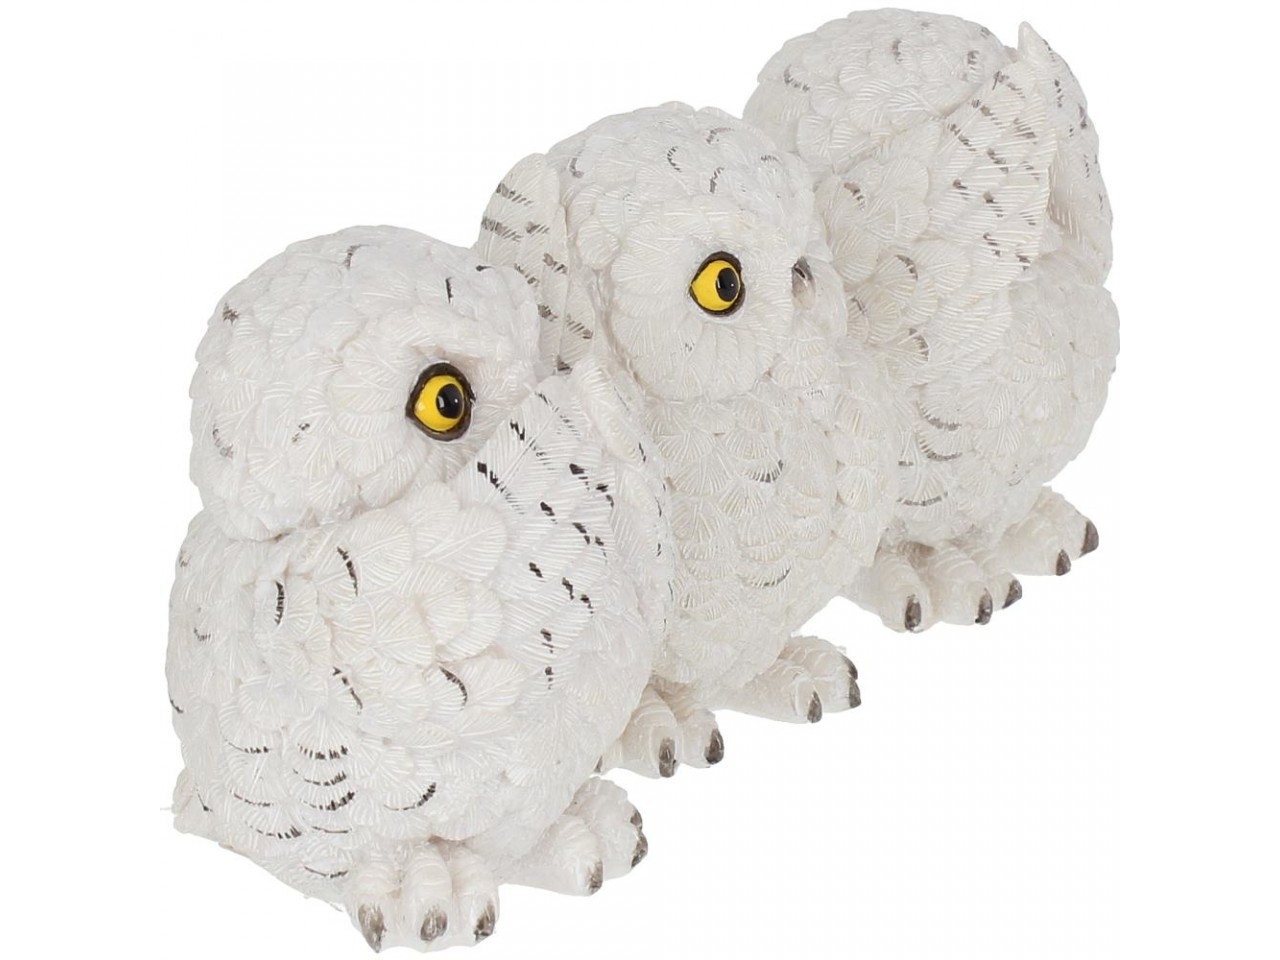 Three Wise Owl Figures